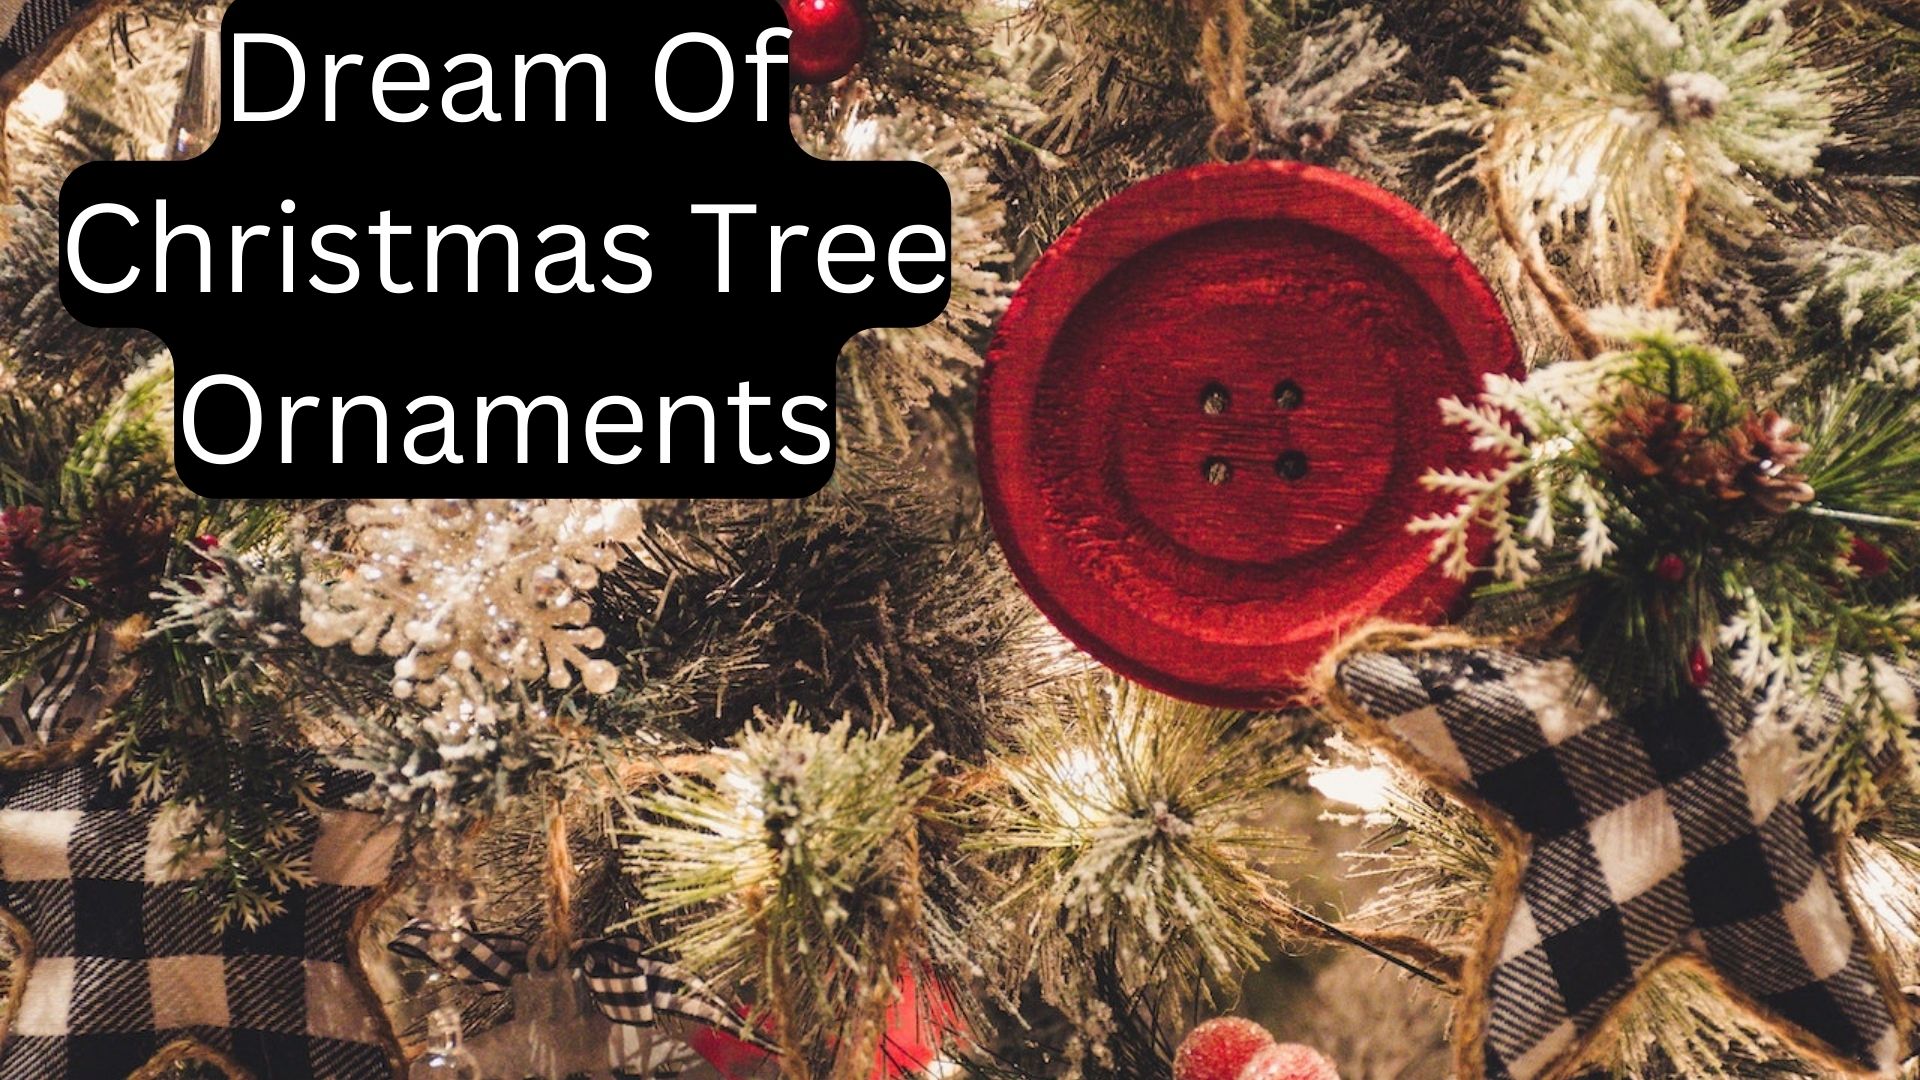 Dream Of Christmas Tree Ornaments - Symbolizes Work Or Relationship Progress